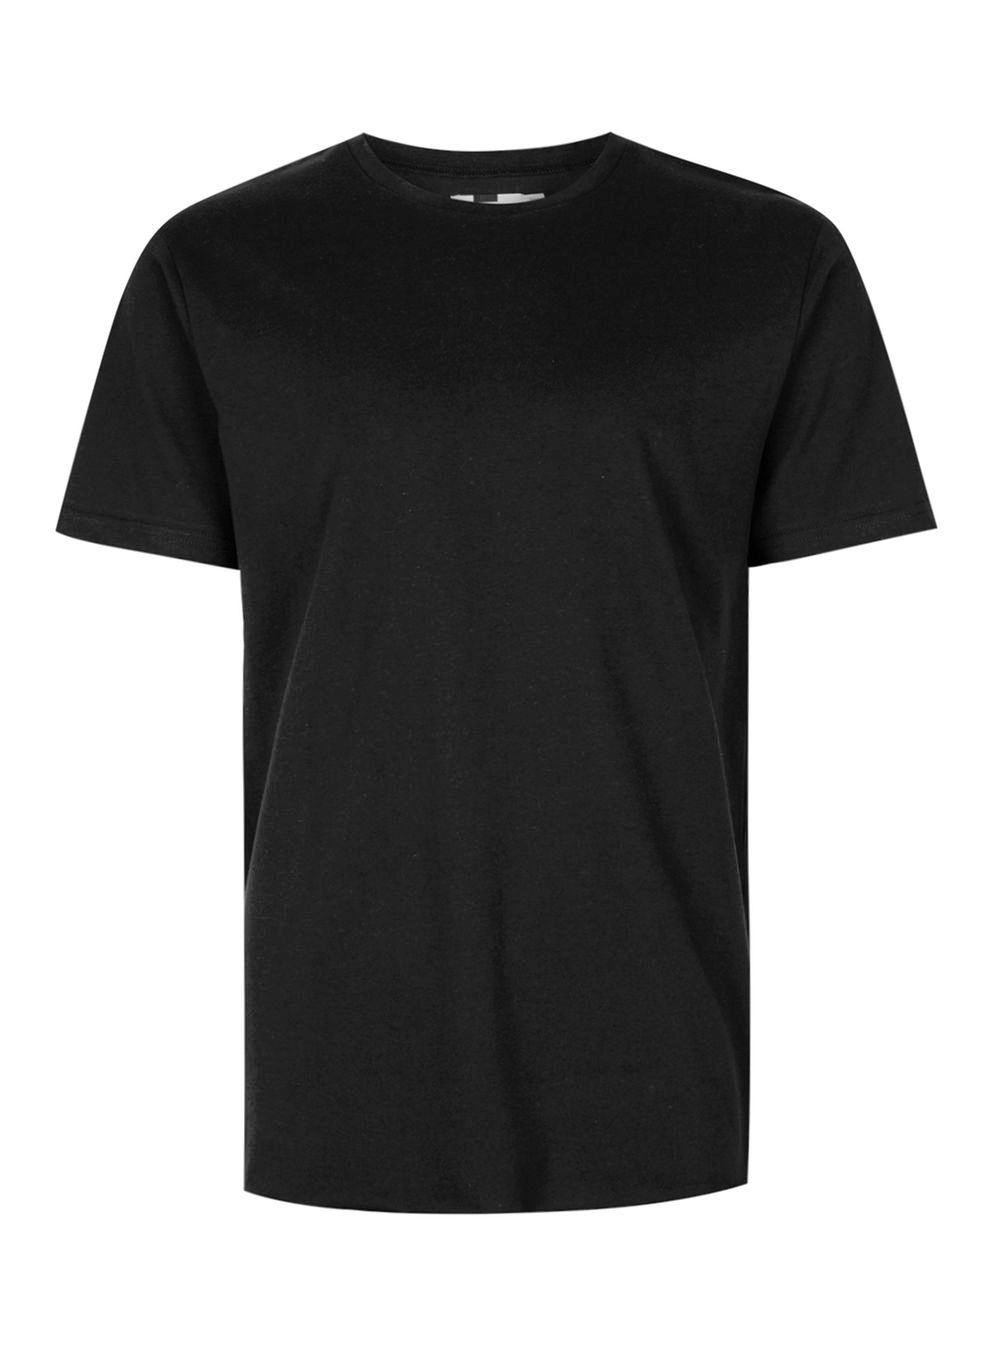 Black Crew Neck T-Shirt Size: XXS